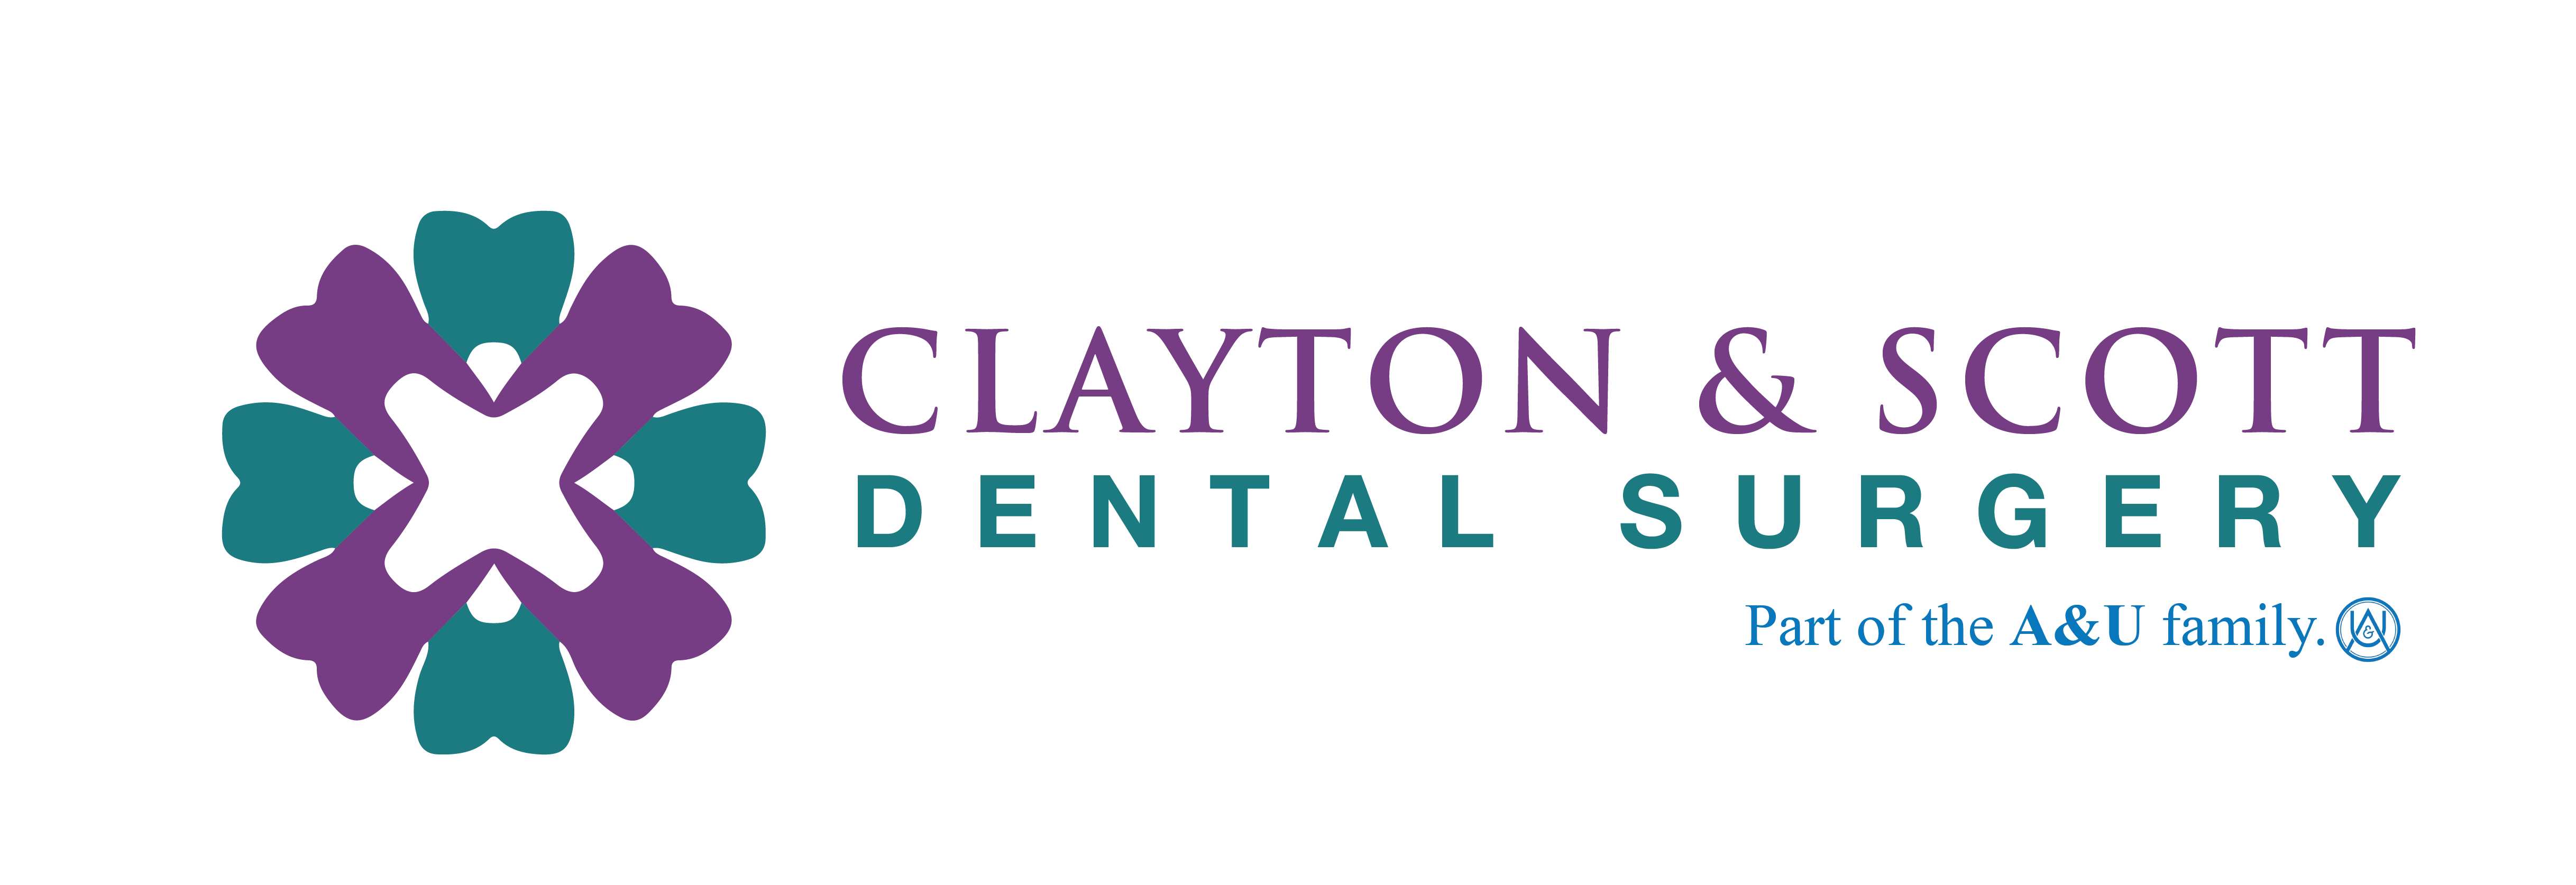 bredbury dental practice logo2